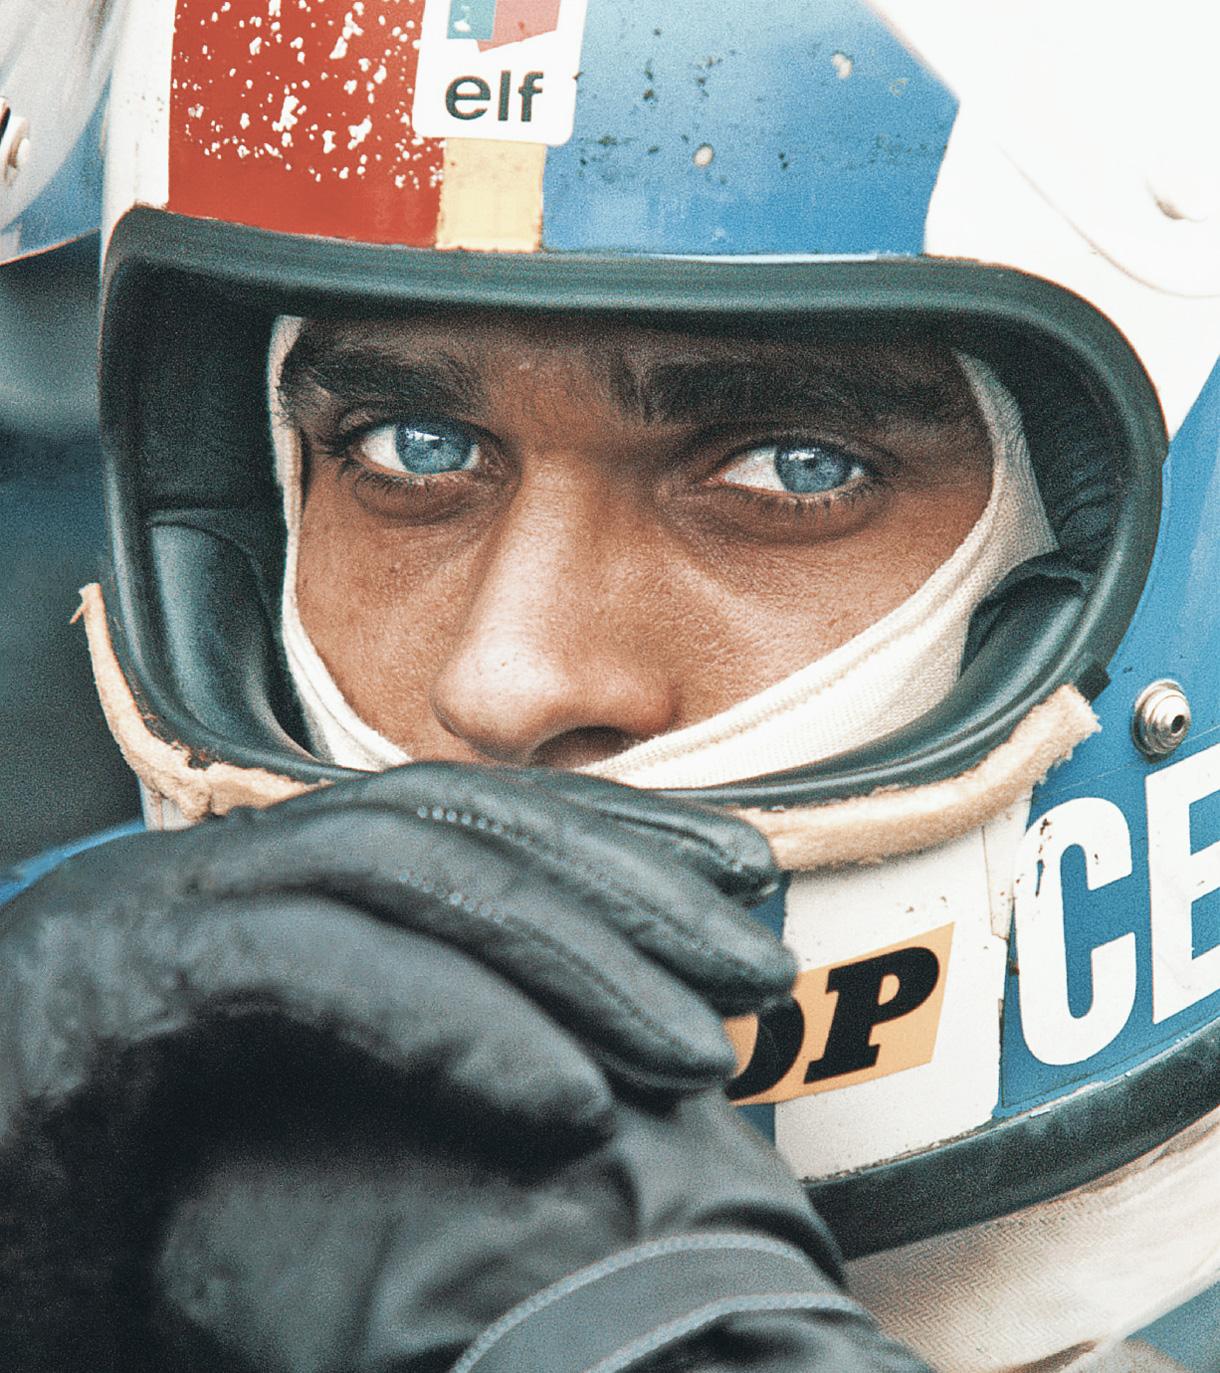 1973 Francois Cevert before being killed at Watkins Glen